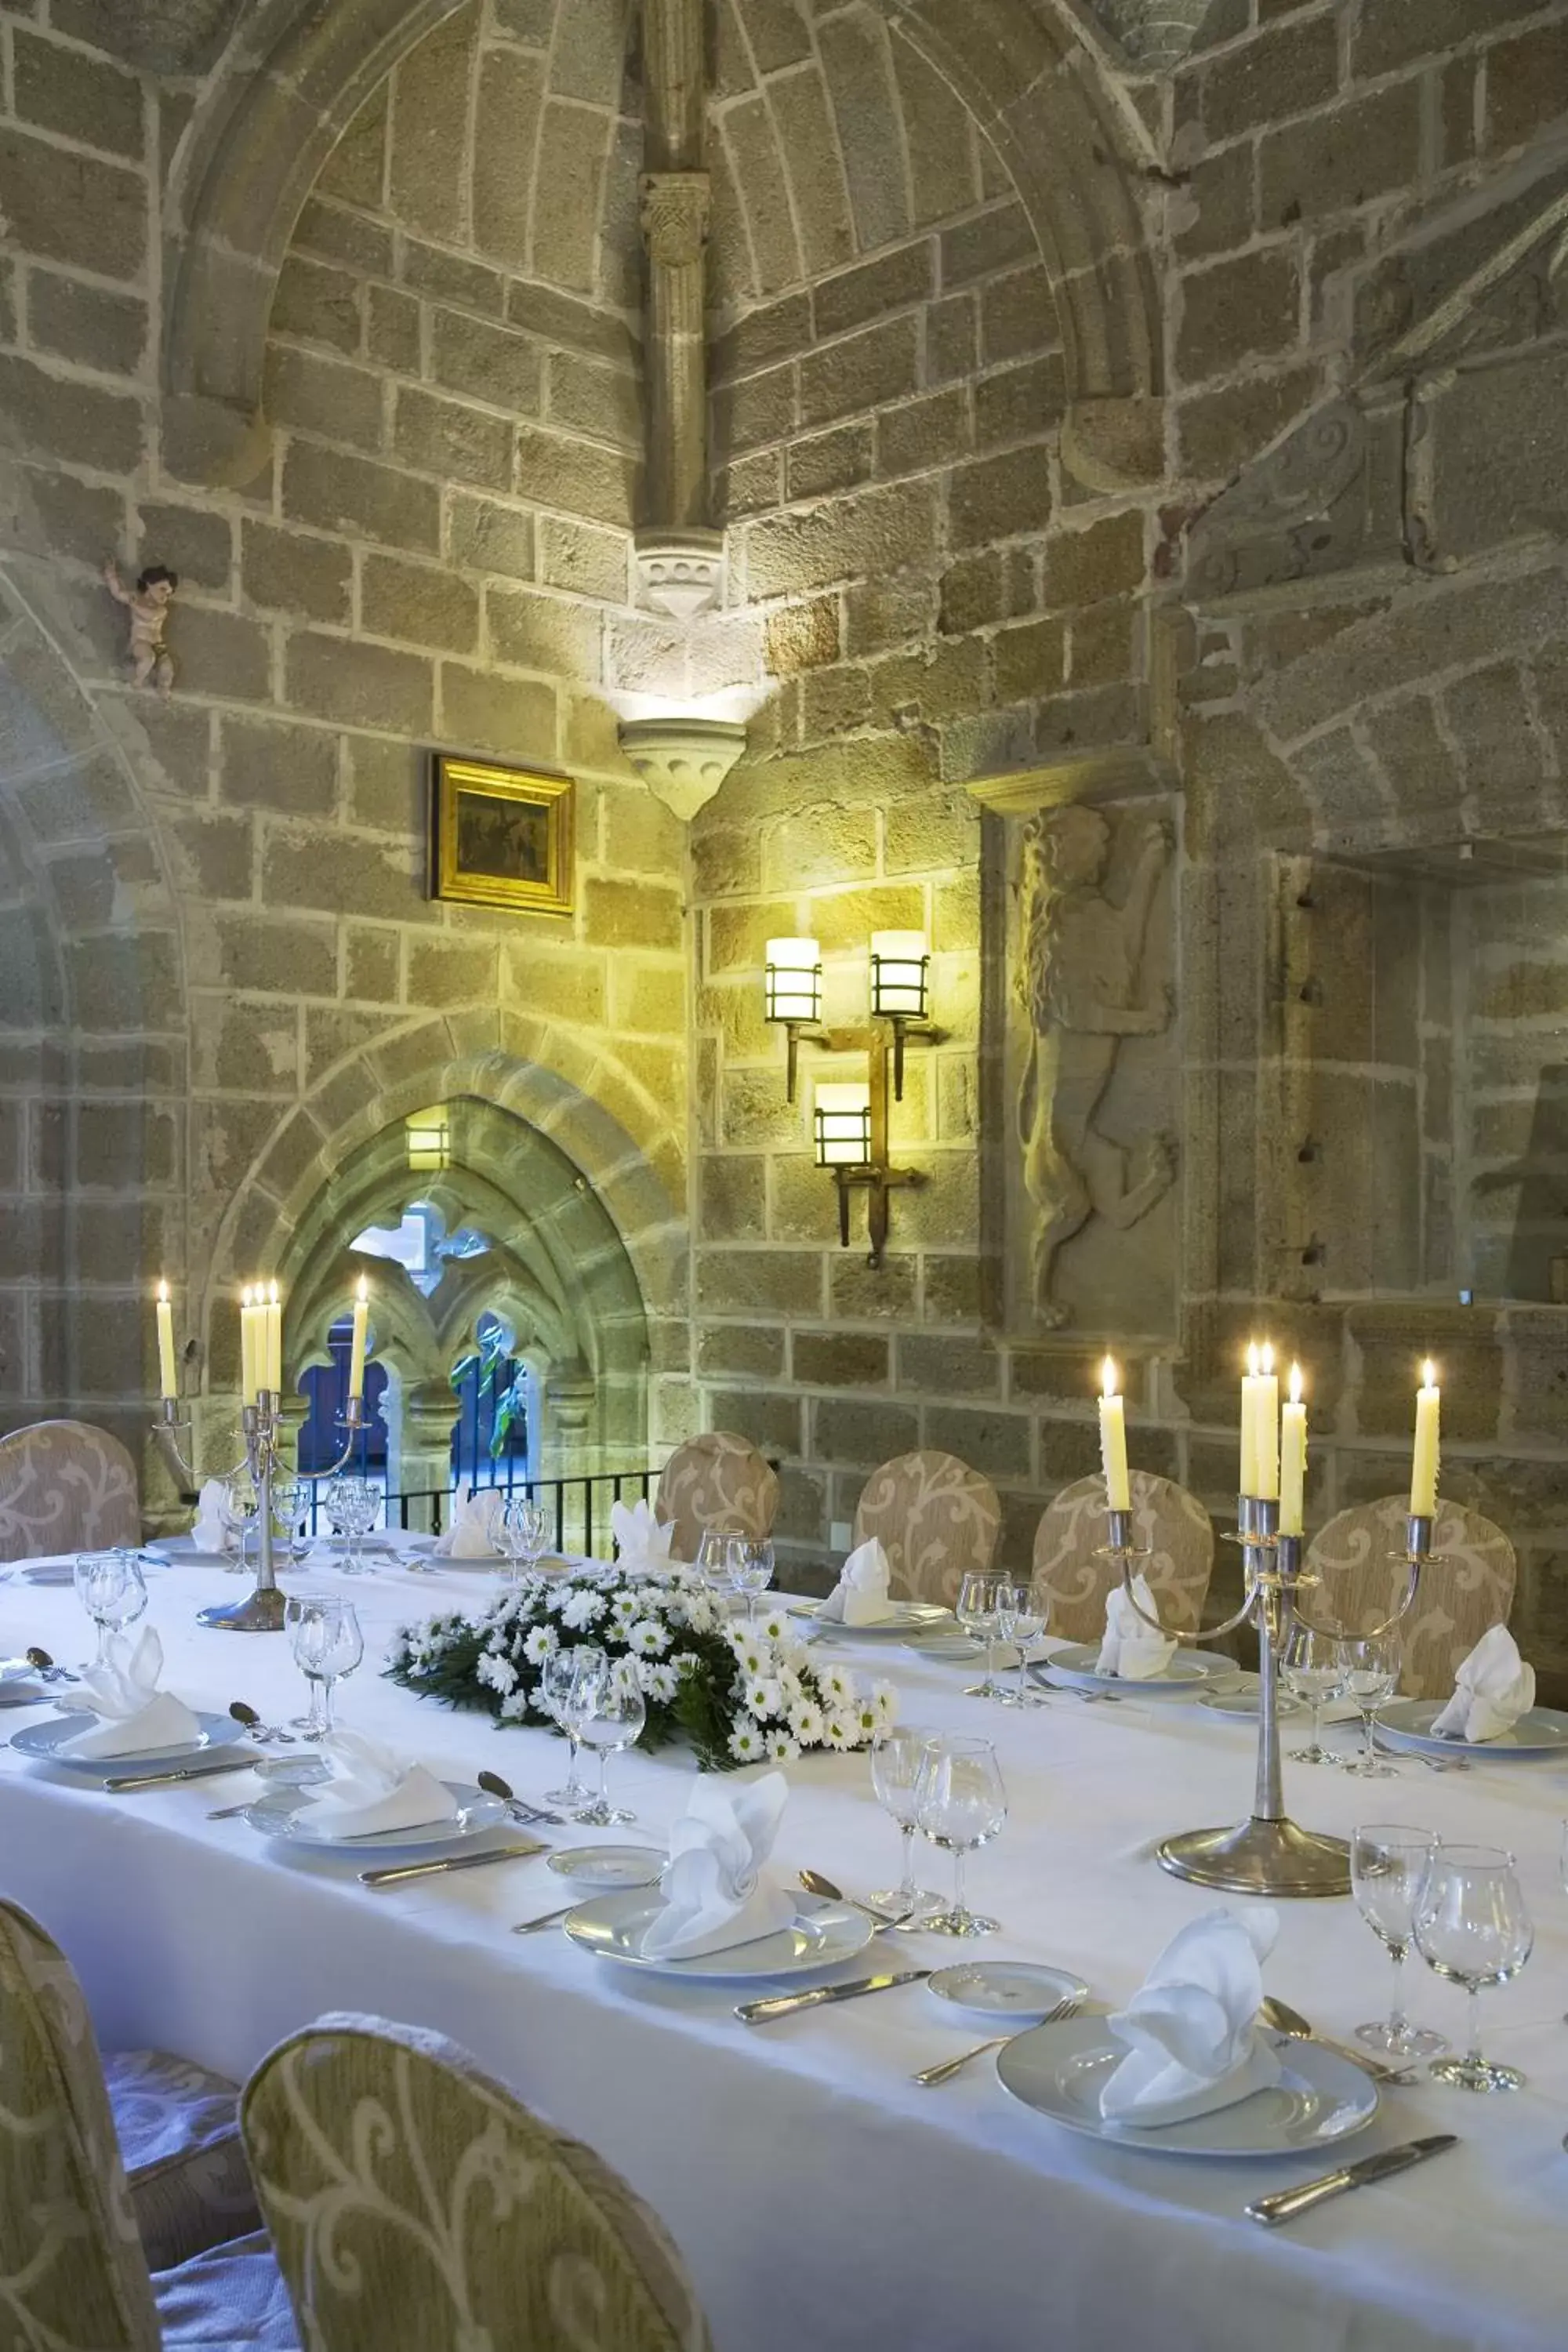 Banquet/Function facilities, Restaurant/Places to Eat in Parador de Plasencia